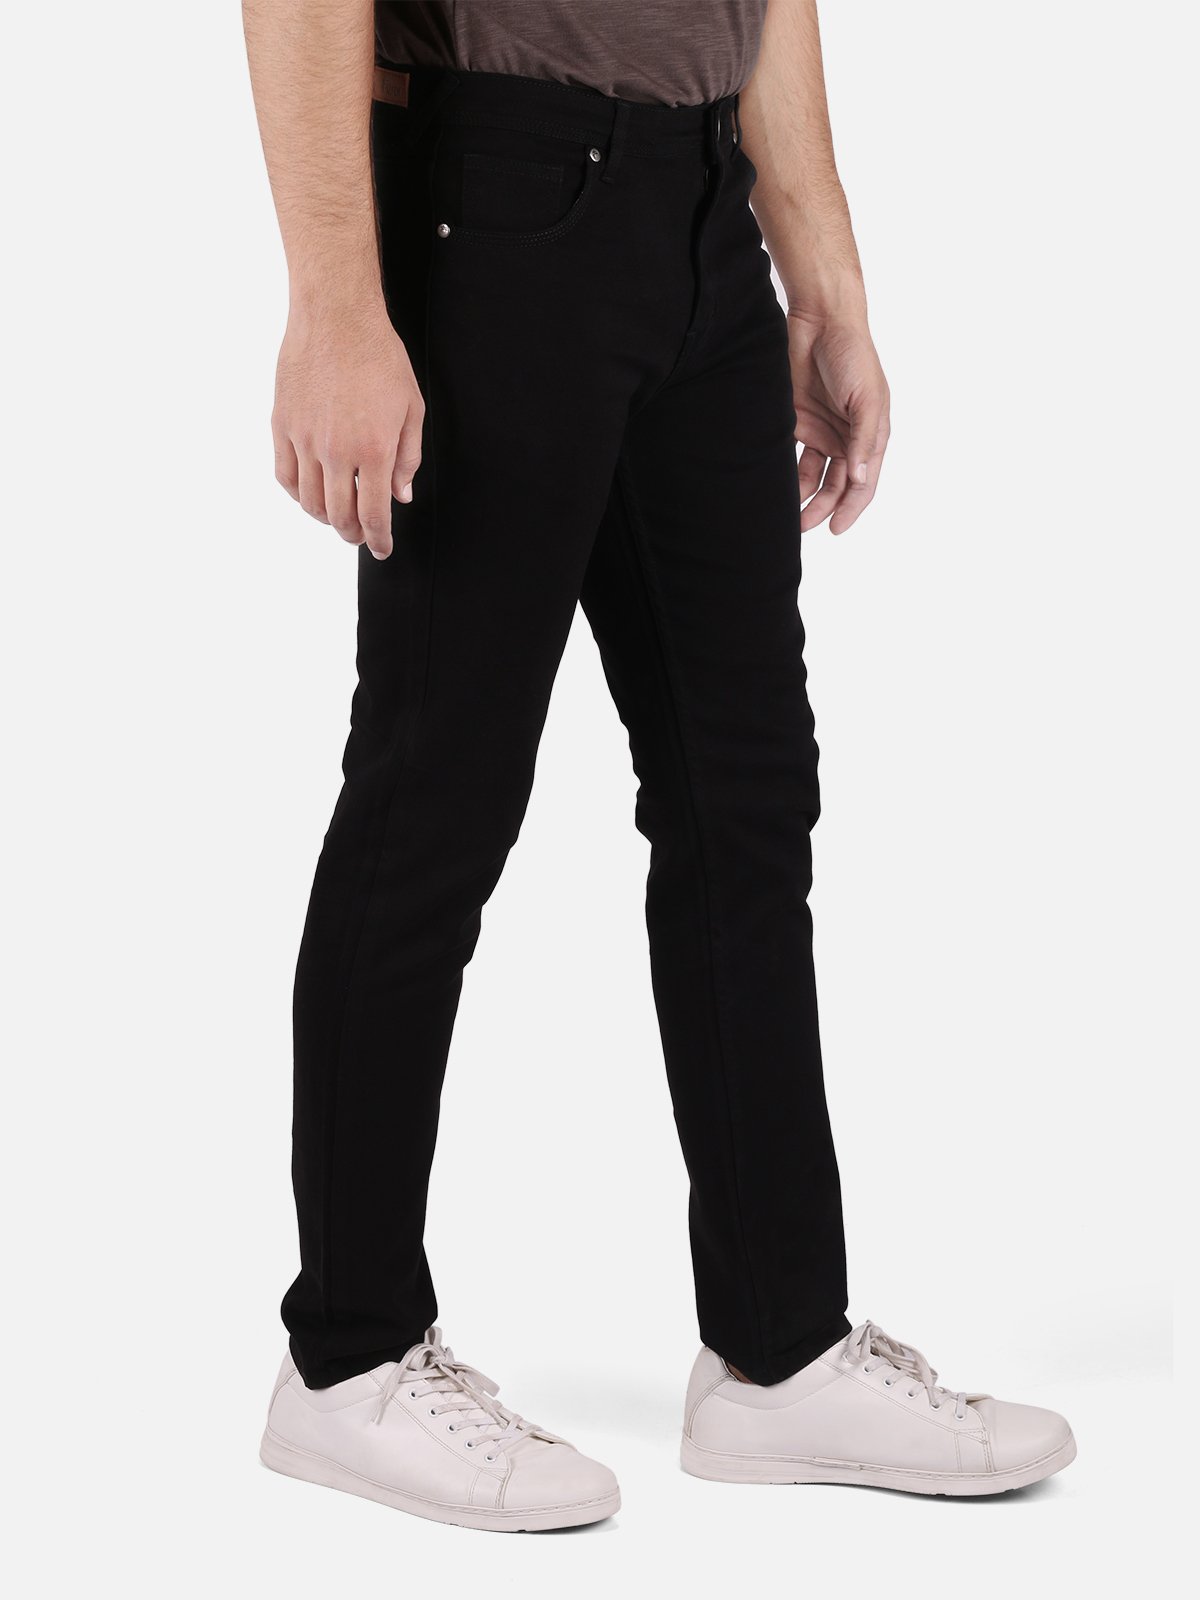 Men's Black Denim Jeans - FMBP18-023